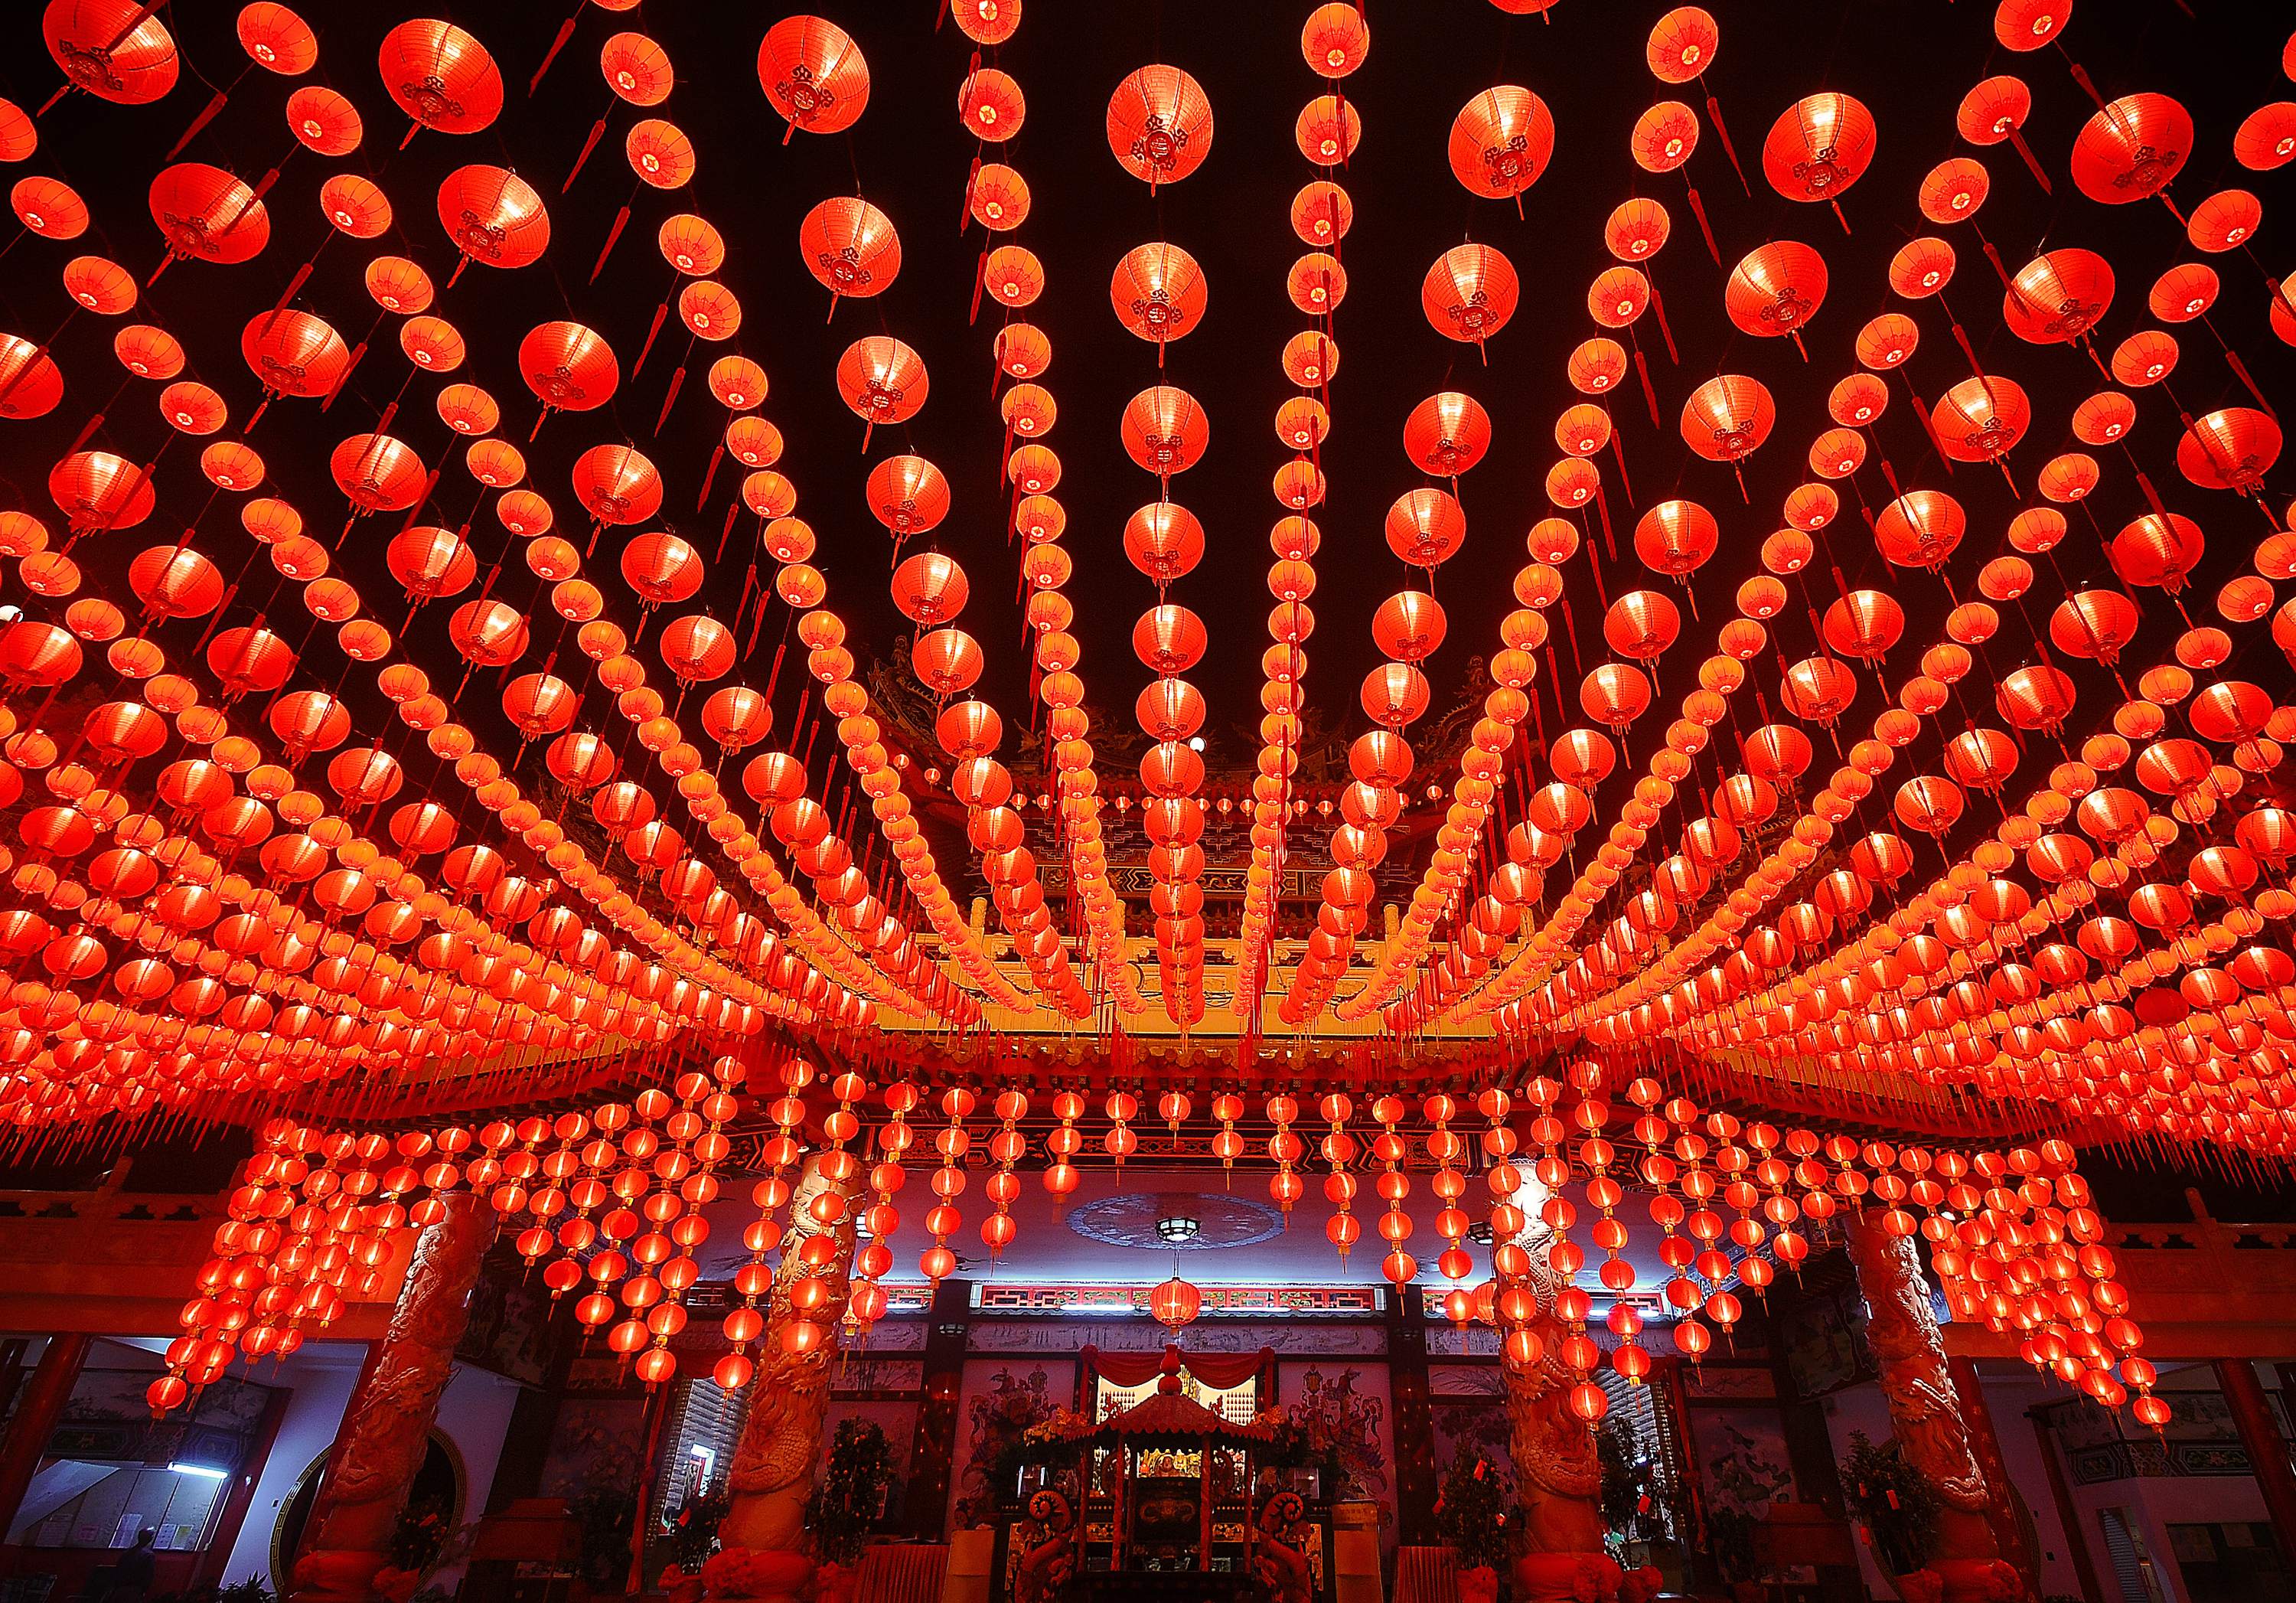 Celebrating Lunar New Year around the world